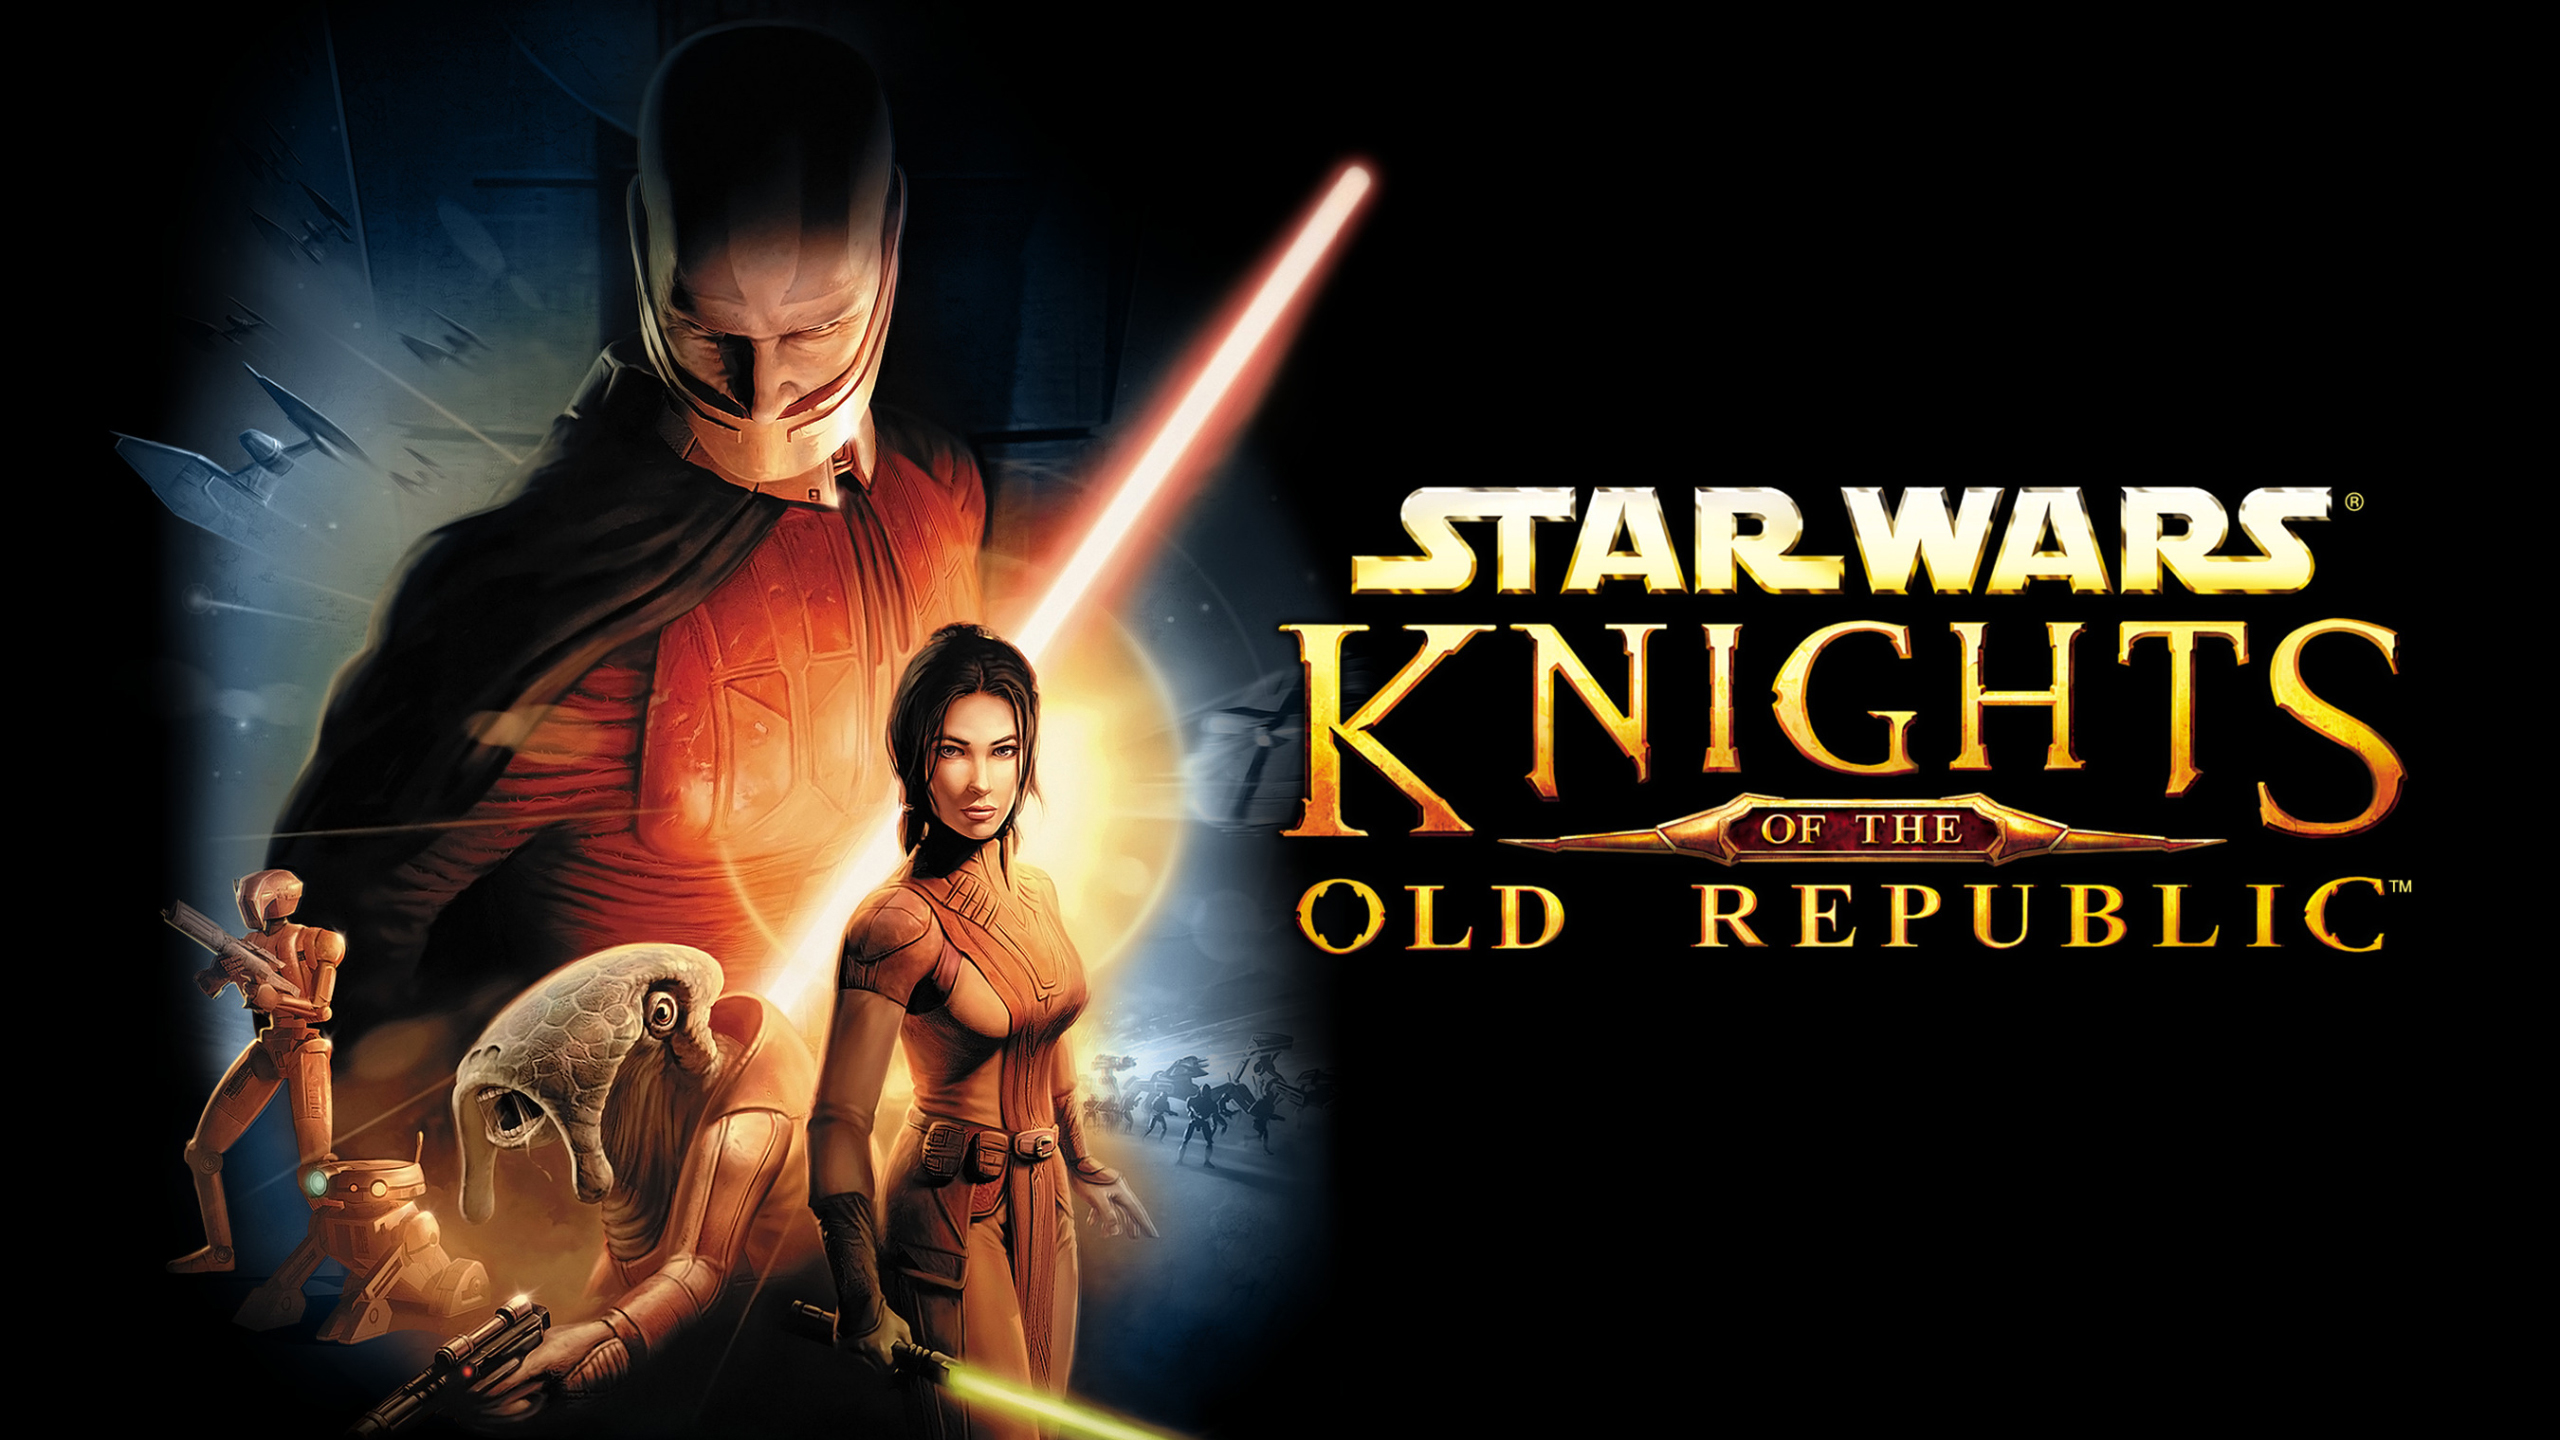 Canderous Ordo Carth Onasi Mission Vao Zaalbar Bastila Shan Juhani 2K Star Wars Knights of the Old Republic